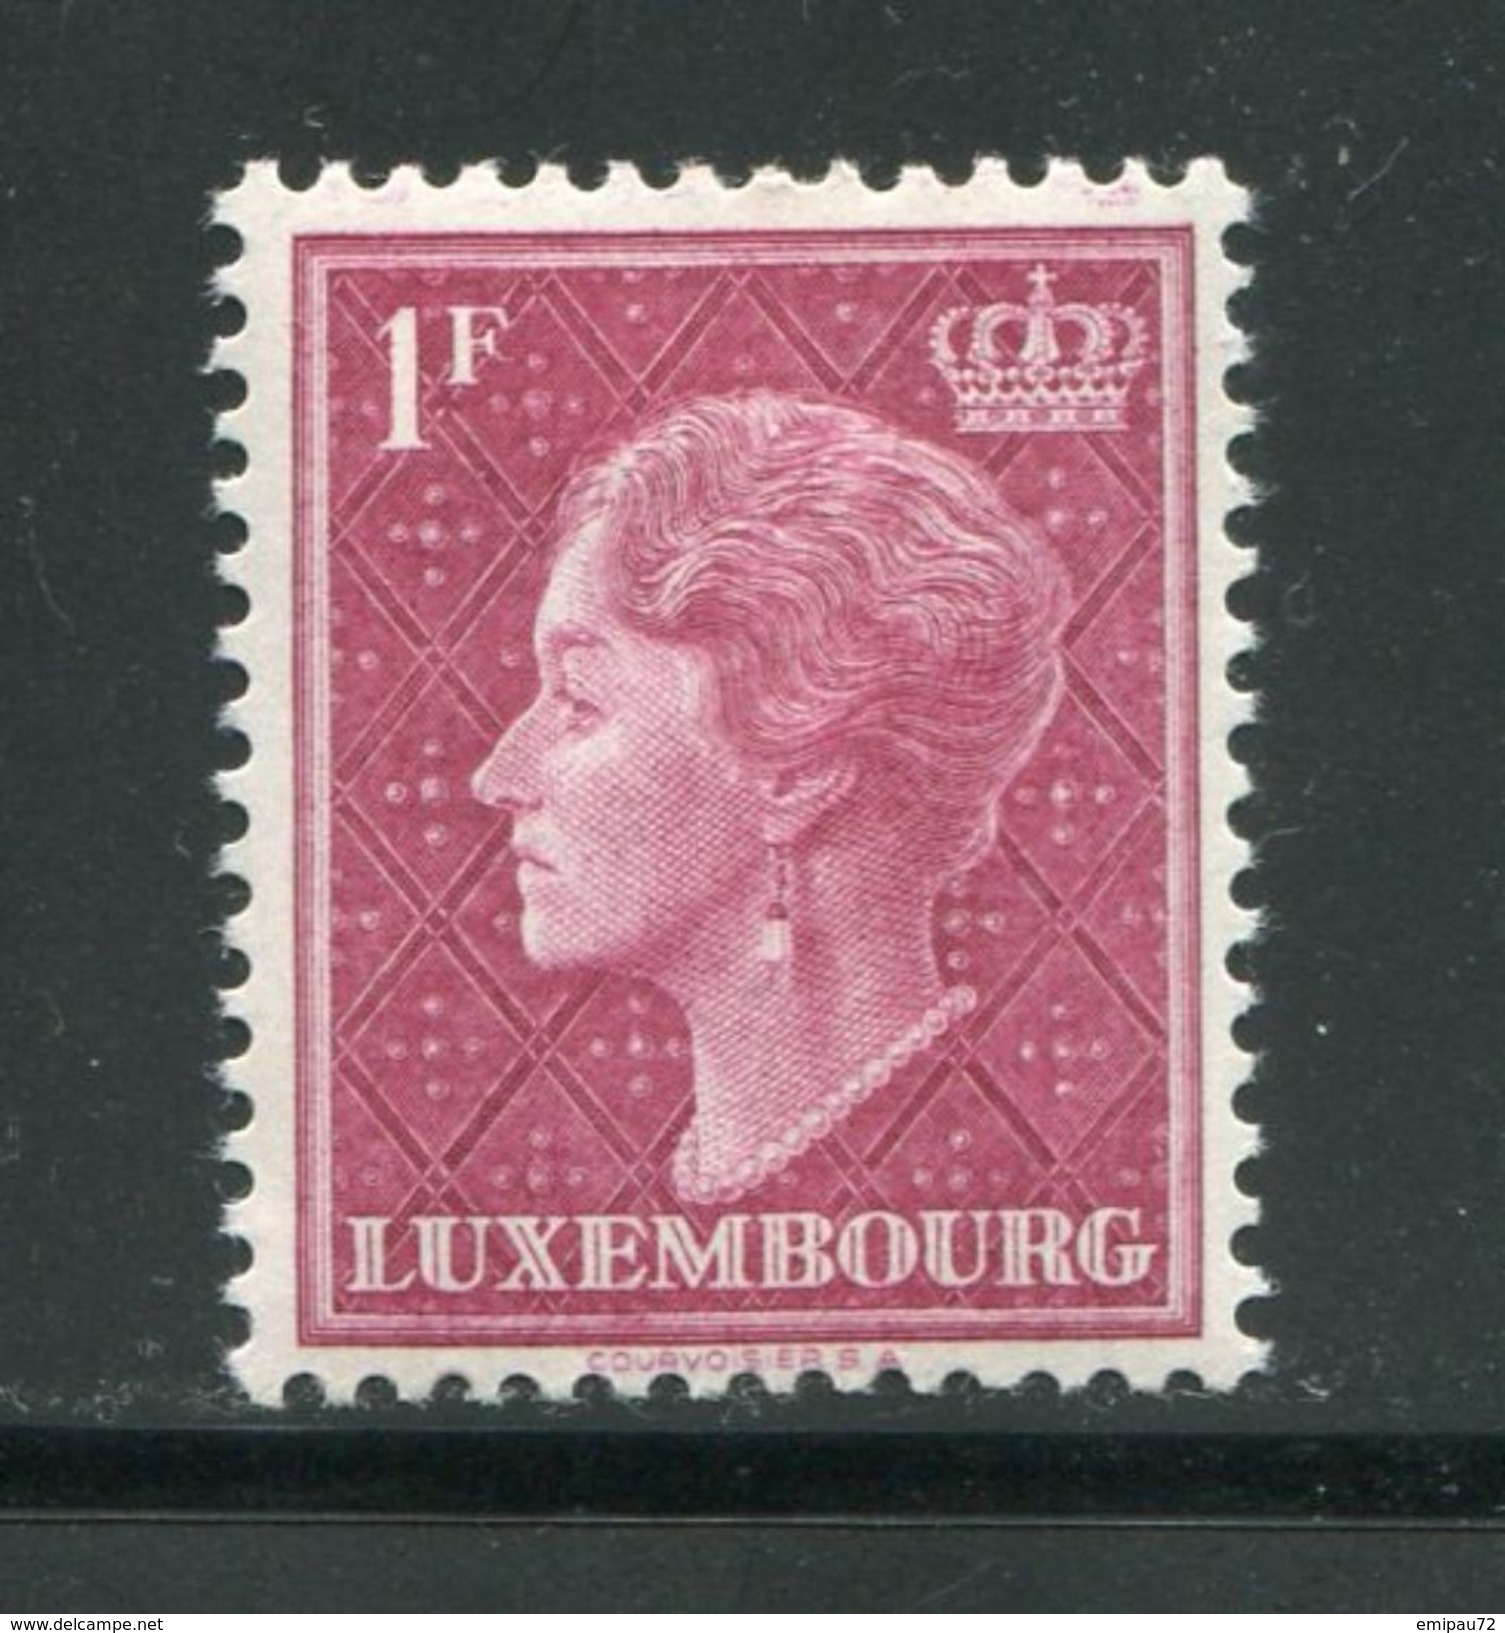 LUXEMBOURG- Y&T N°418- Neuf Avec Charnière * - 1948-58 Charlotte Linksprofil